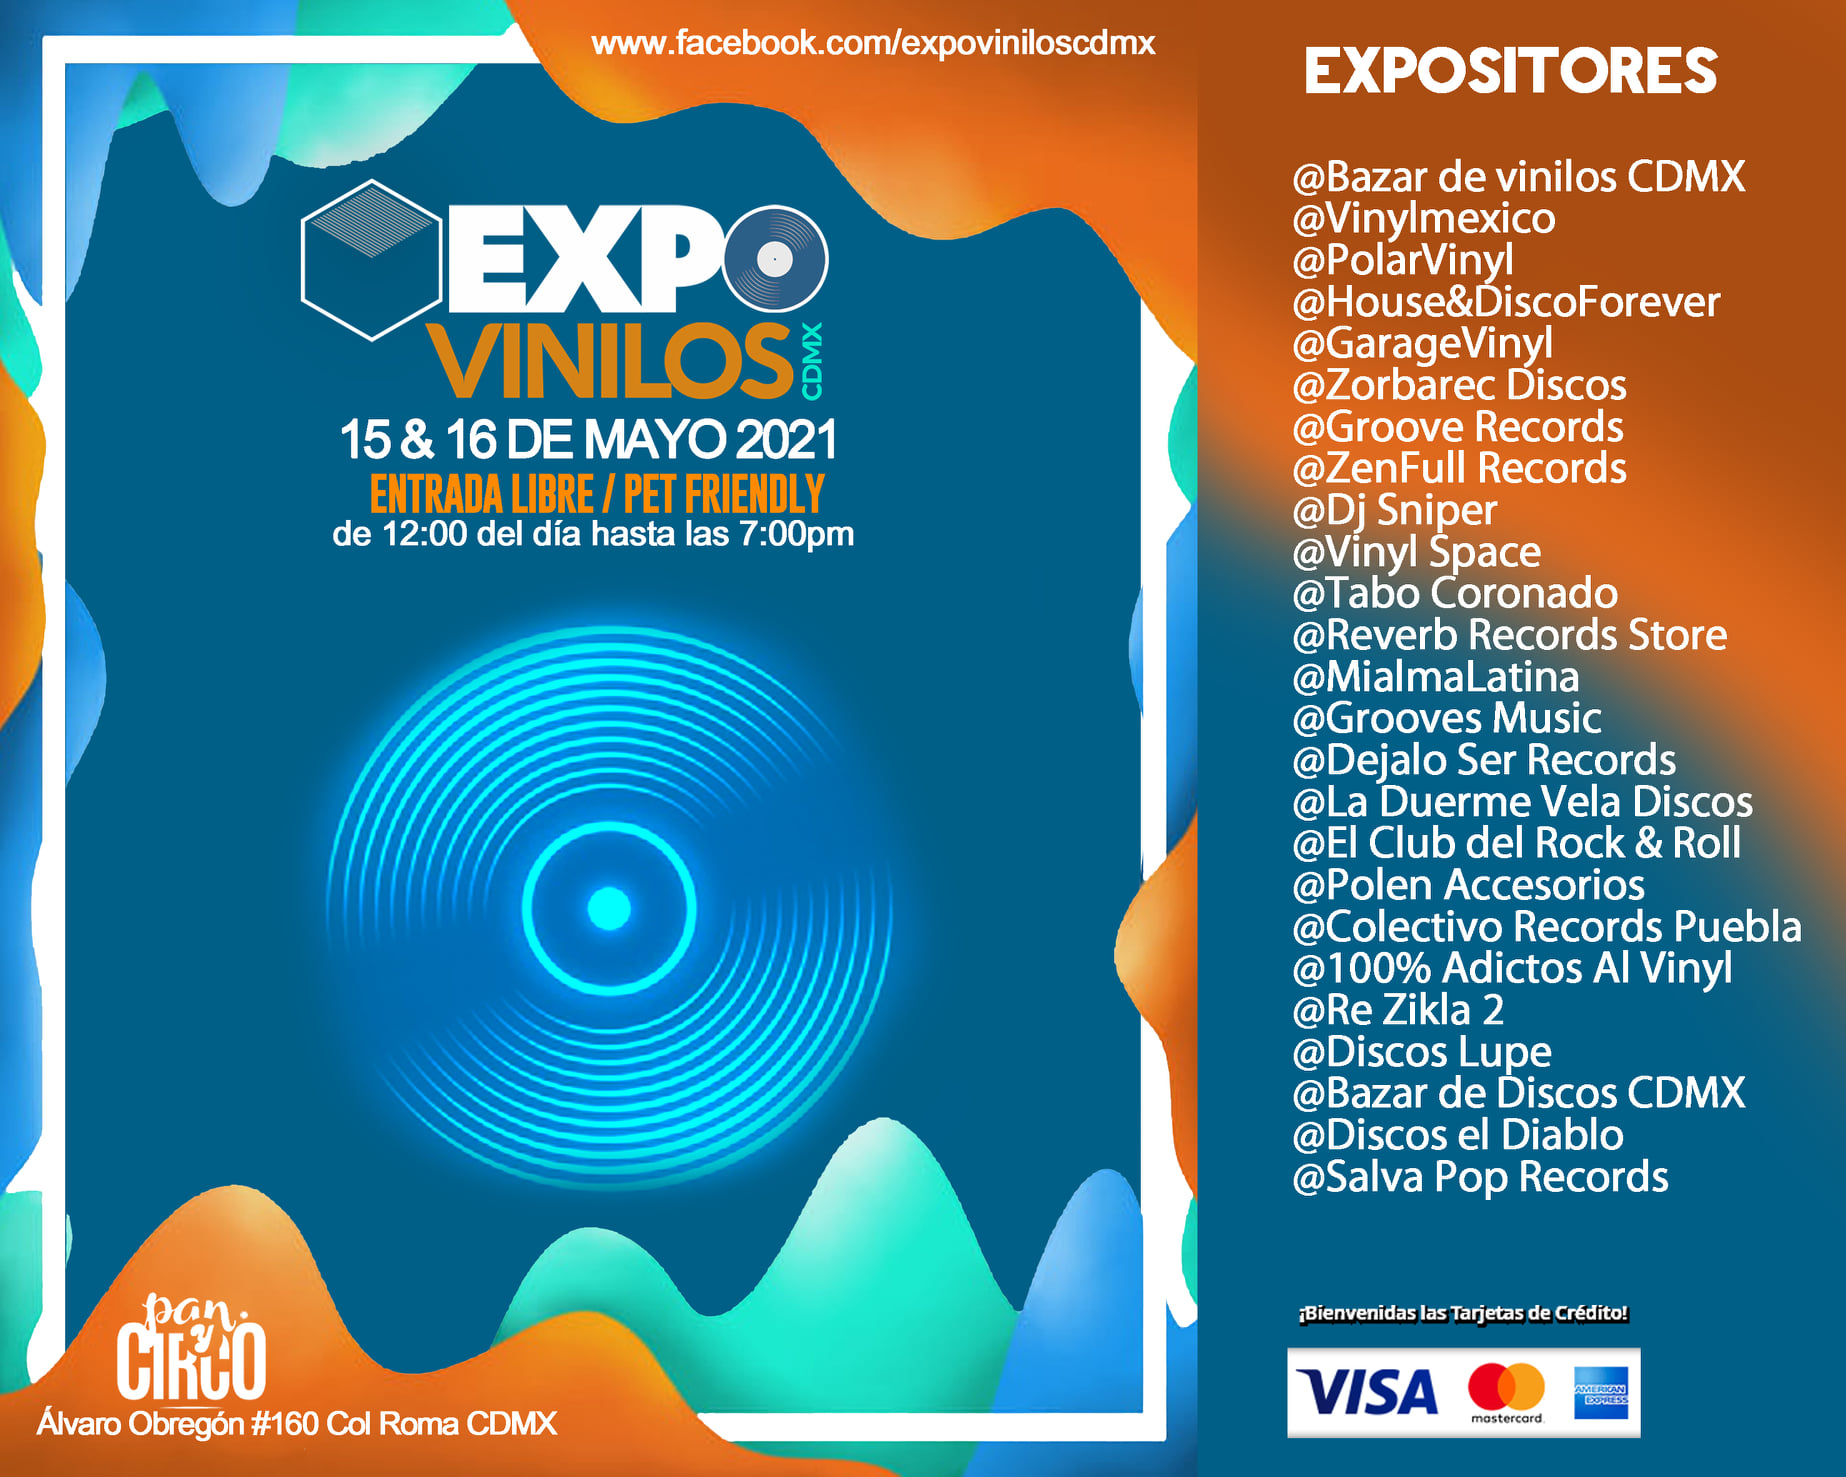 expo vinilos_expositores